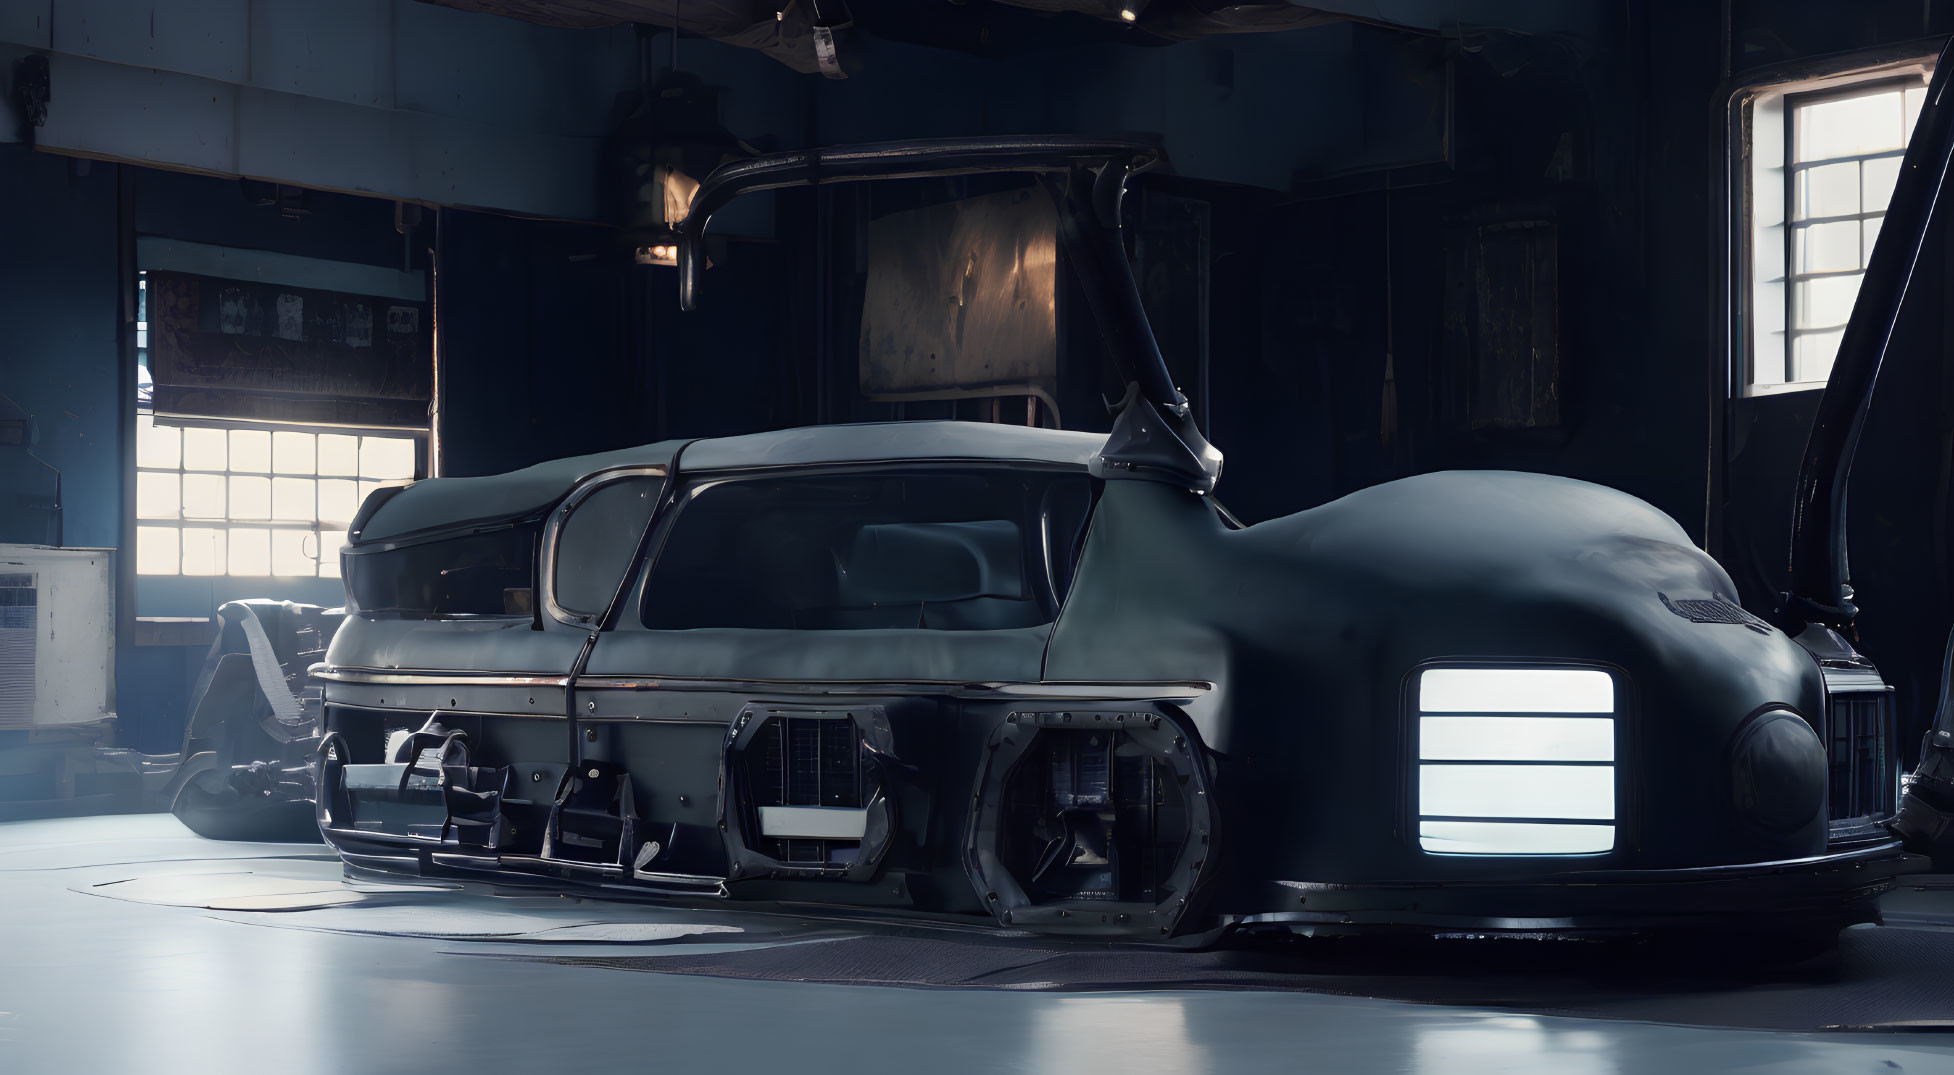 Classic car body in dark garage: sleek design for restoration/customization